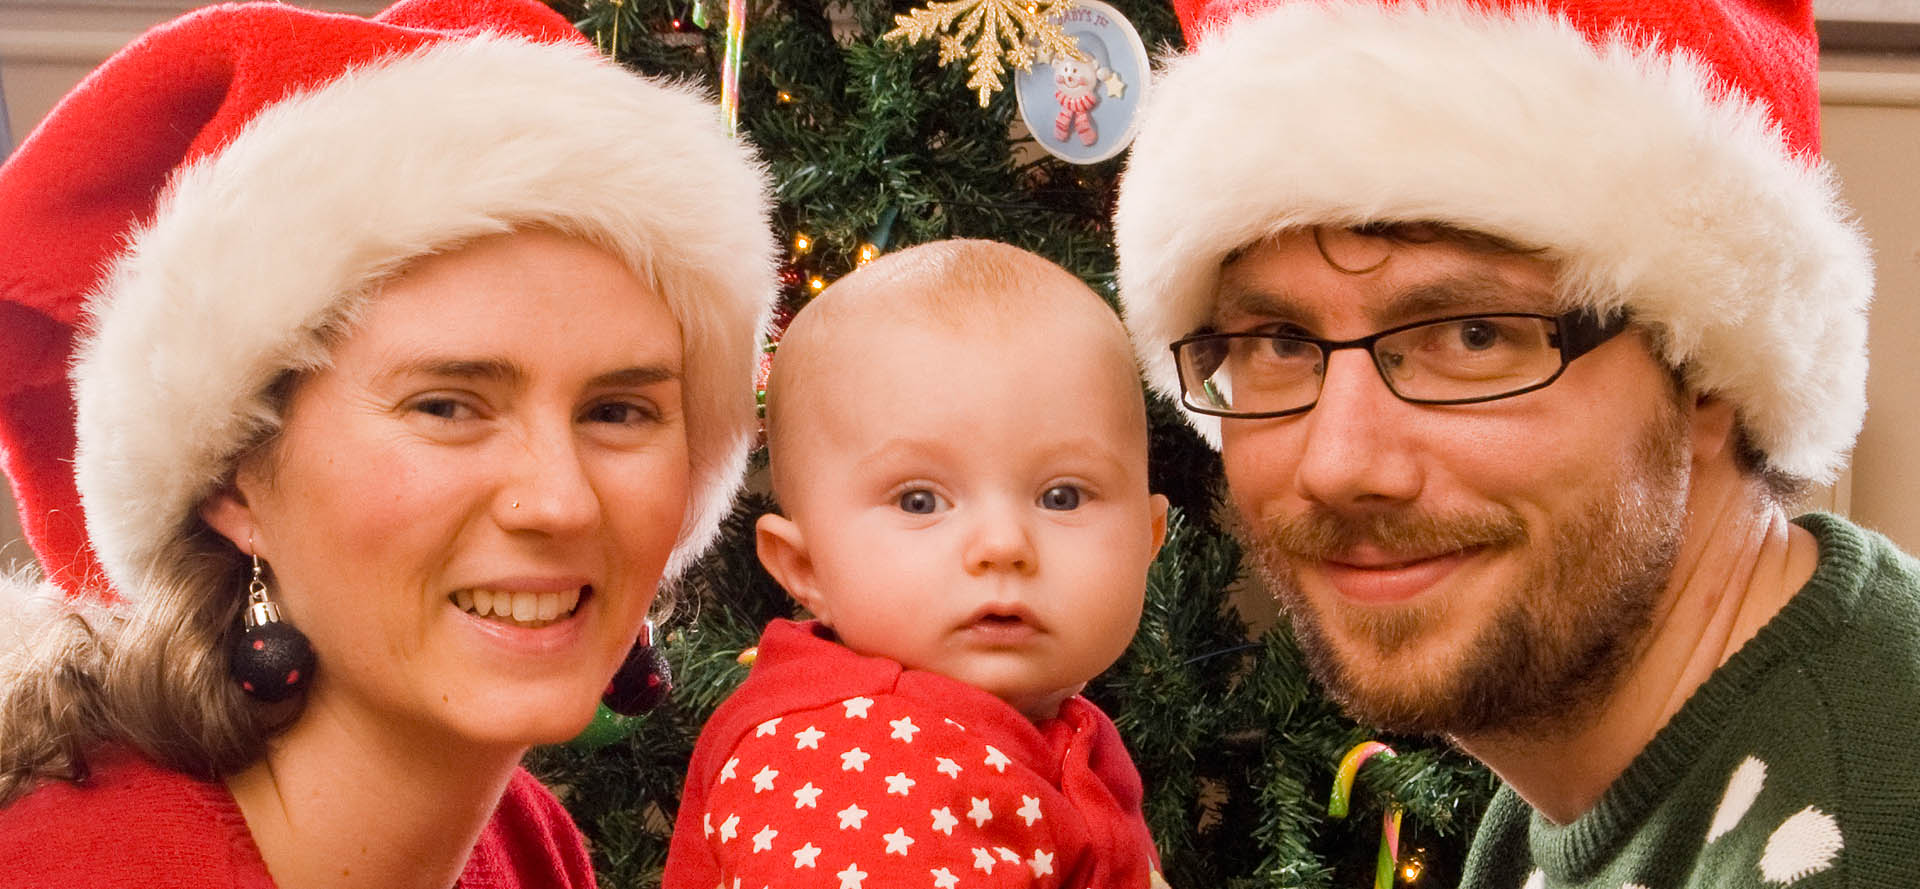 Baby photographer Belfast - Christmas family photography photo